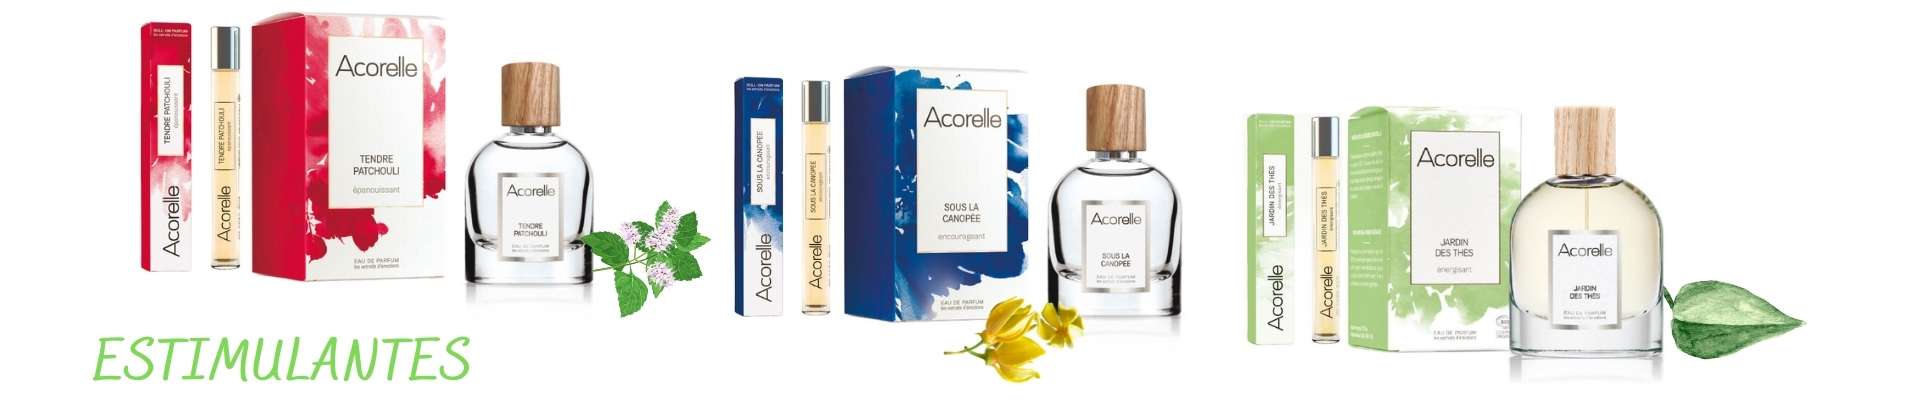 Olfatoterapia perfumes Bio estimulantes Acorelle